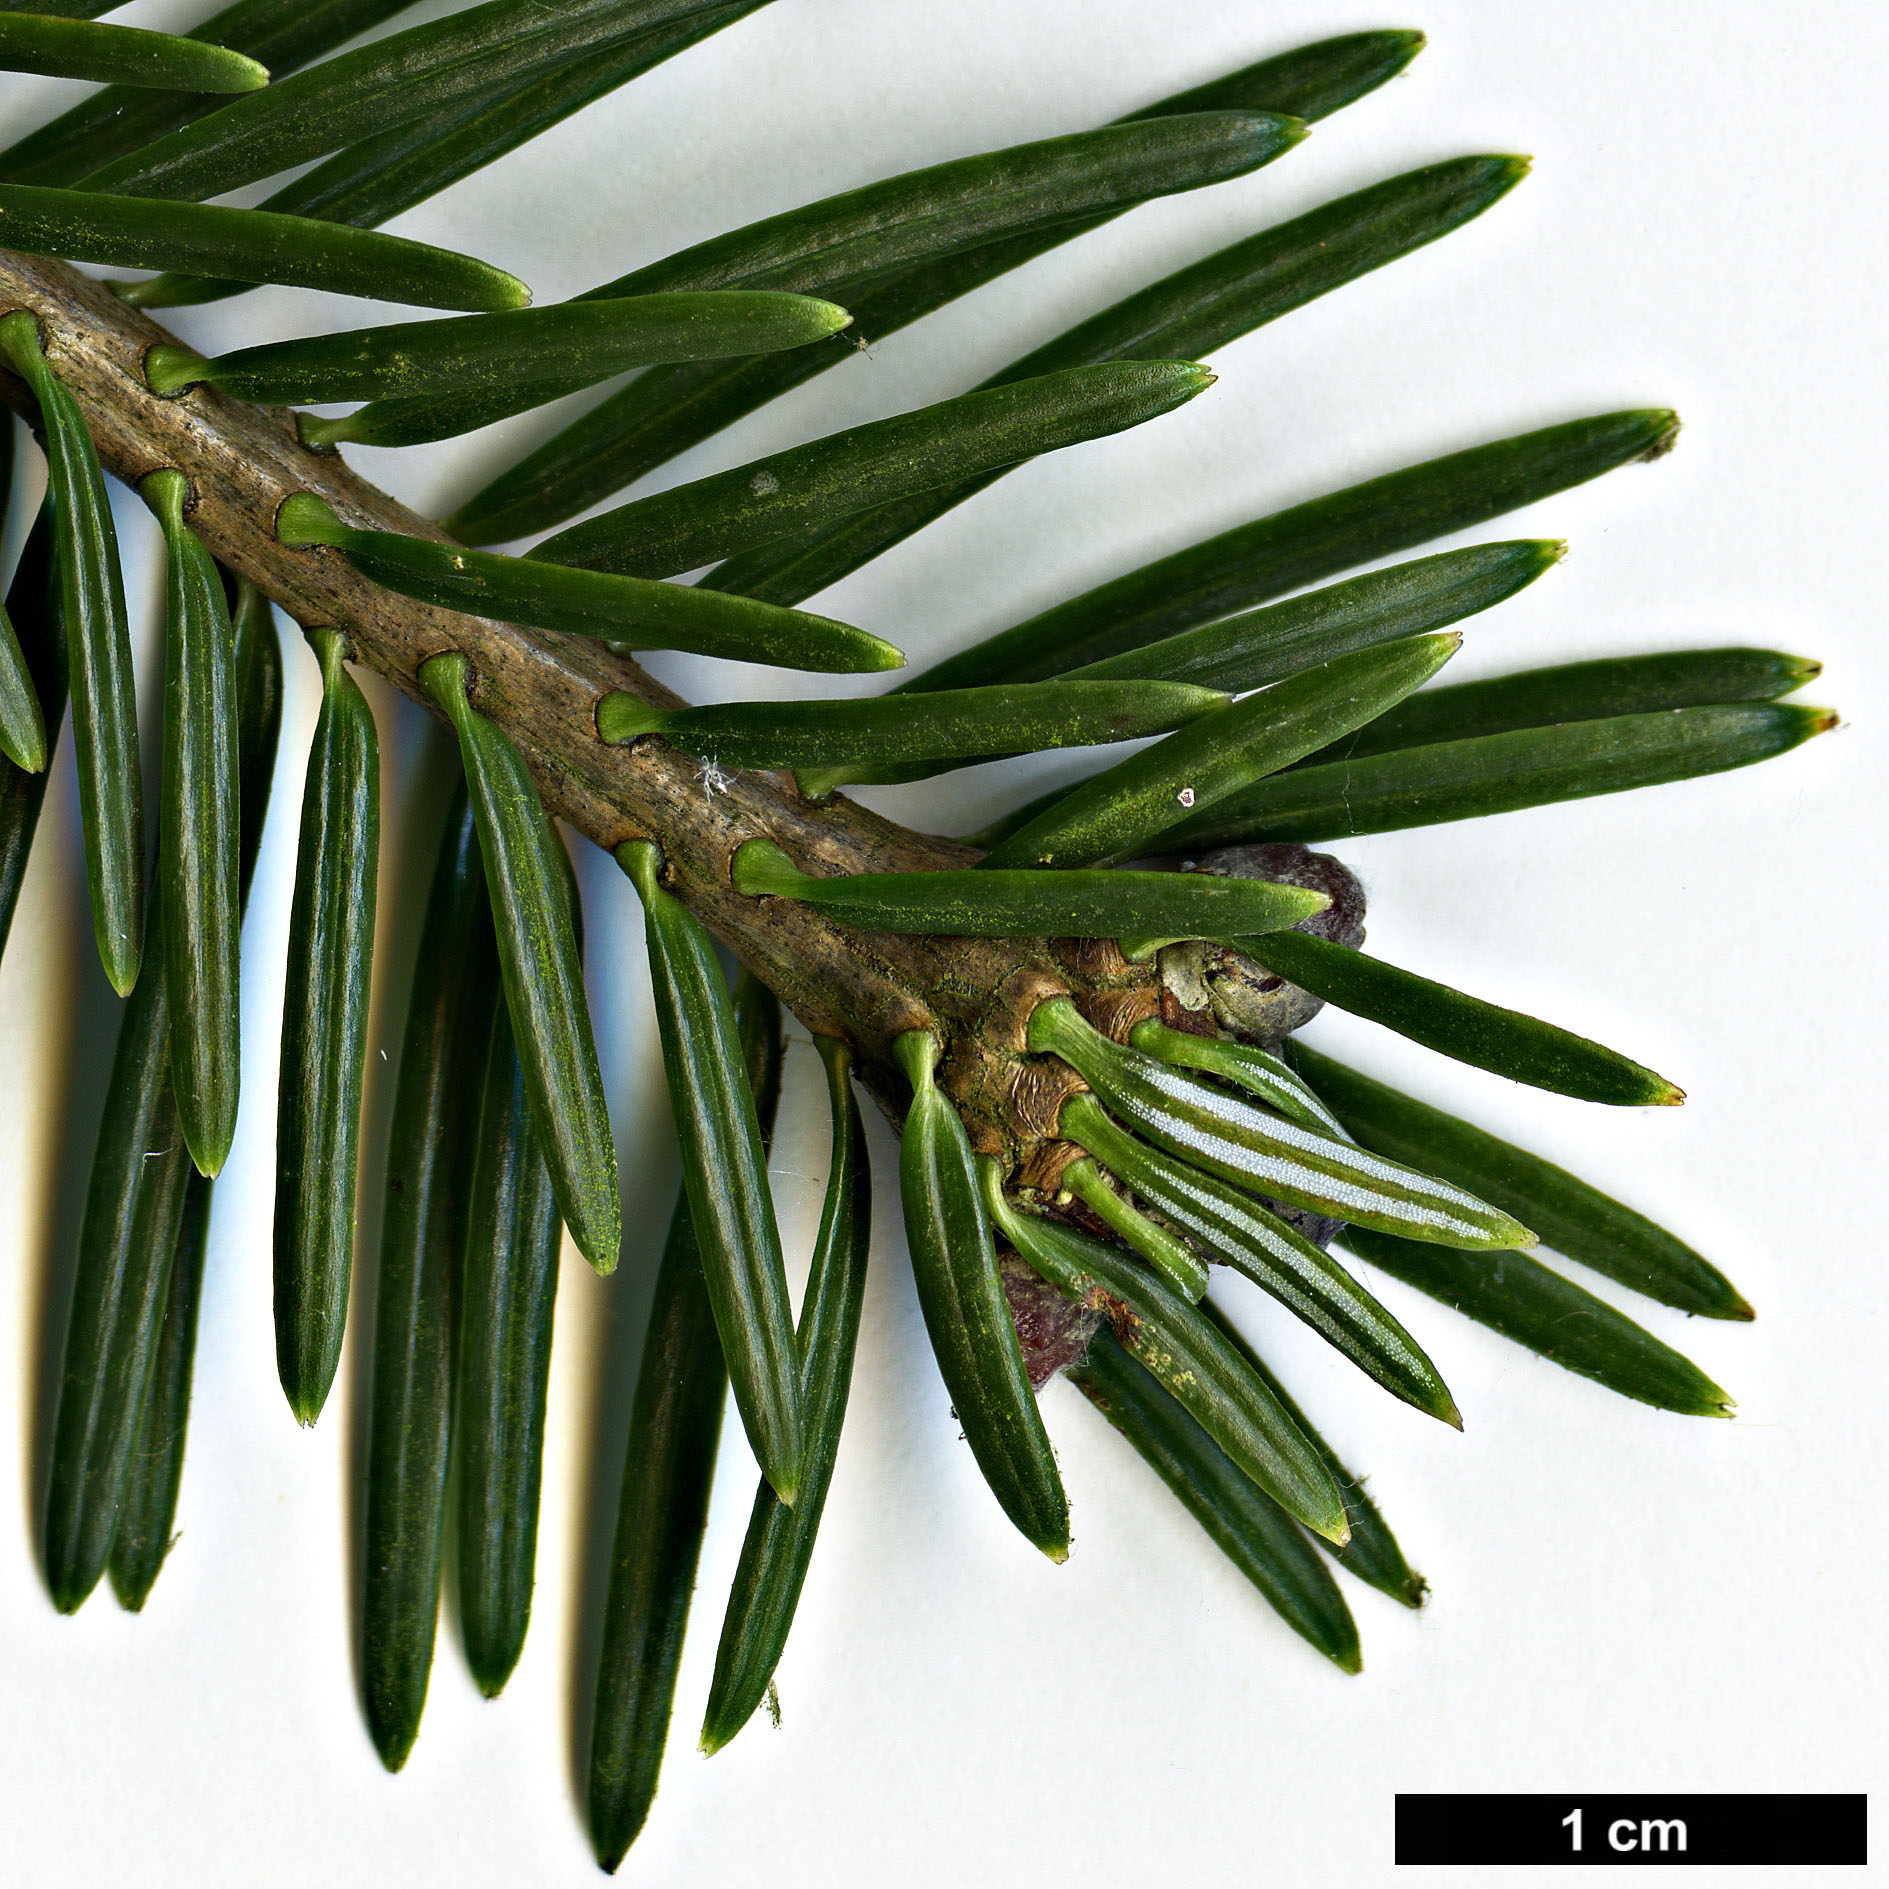 High resolution image: Family: Pinaceae - Genus: Abies - Taxon: fabri - SpeciesSub: subsp. minensis